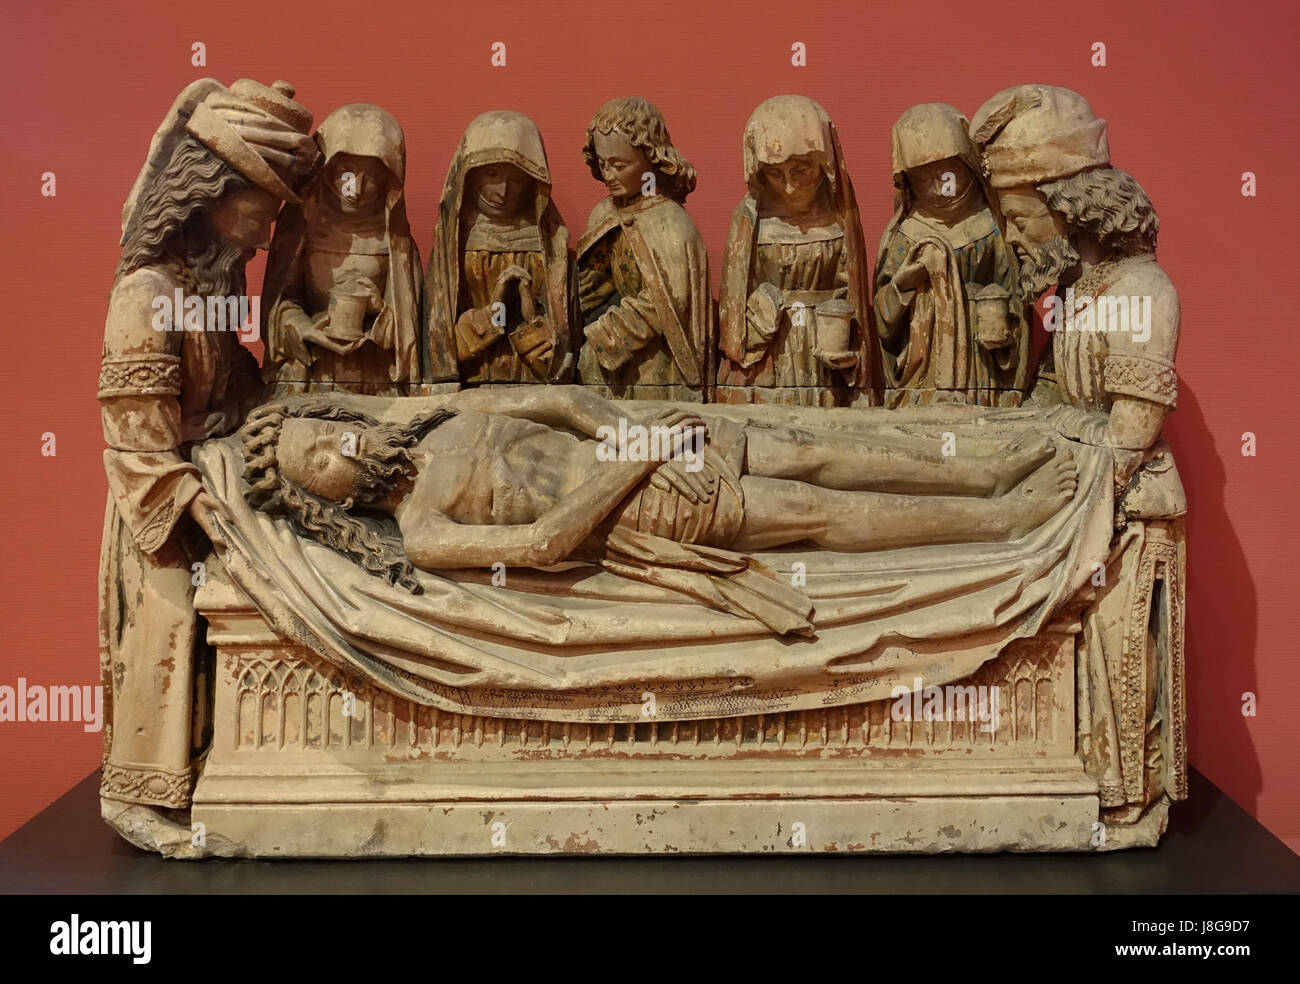 Entombment of Christ, from Hautrage, Hainaut, 1502 1505, limestone, polychrome   Cinquantenaire Museum   Brussels, Belgium   DSC08641 Stock Photo